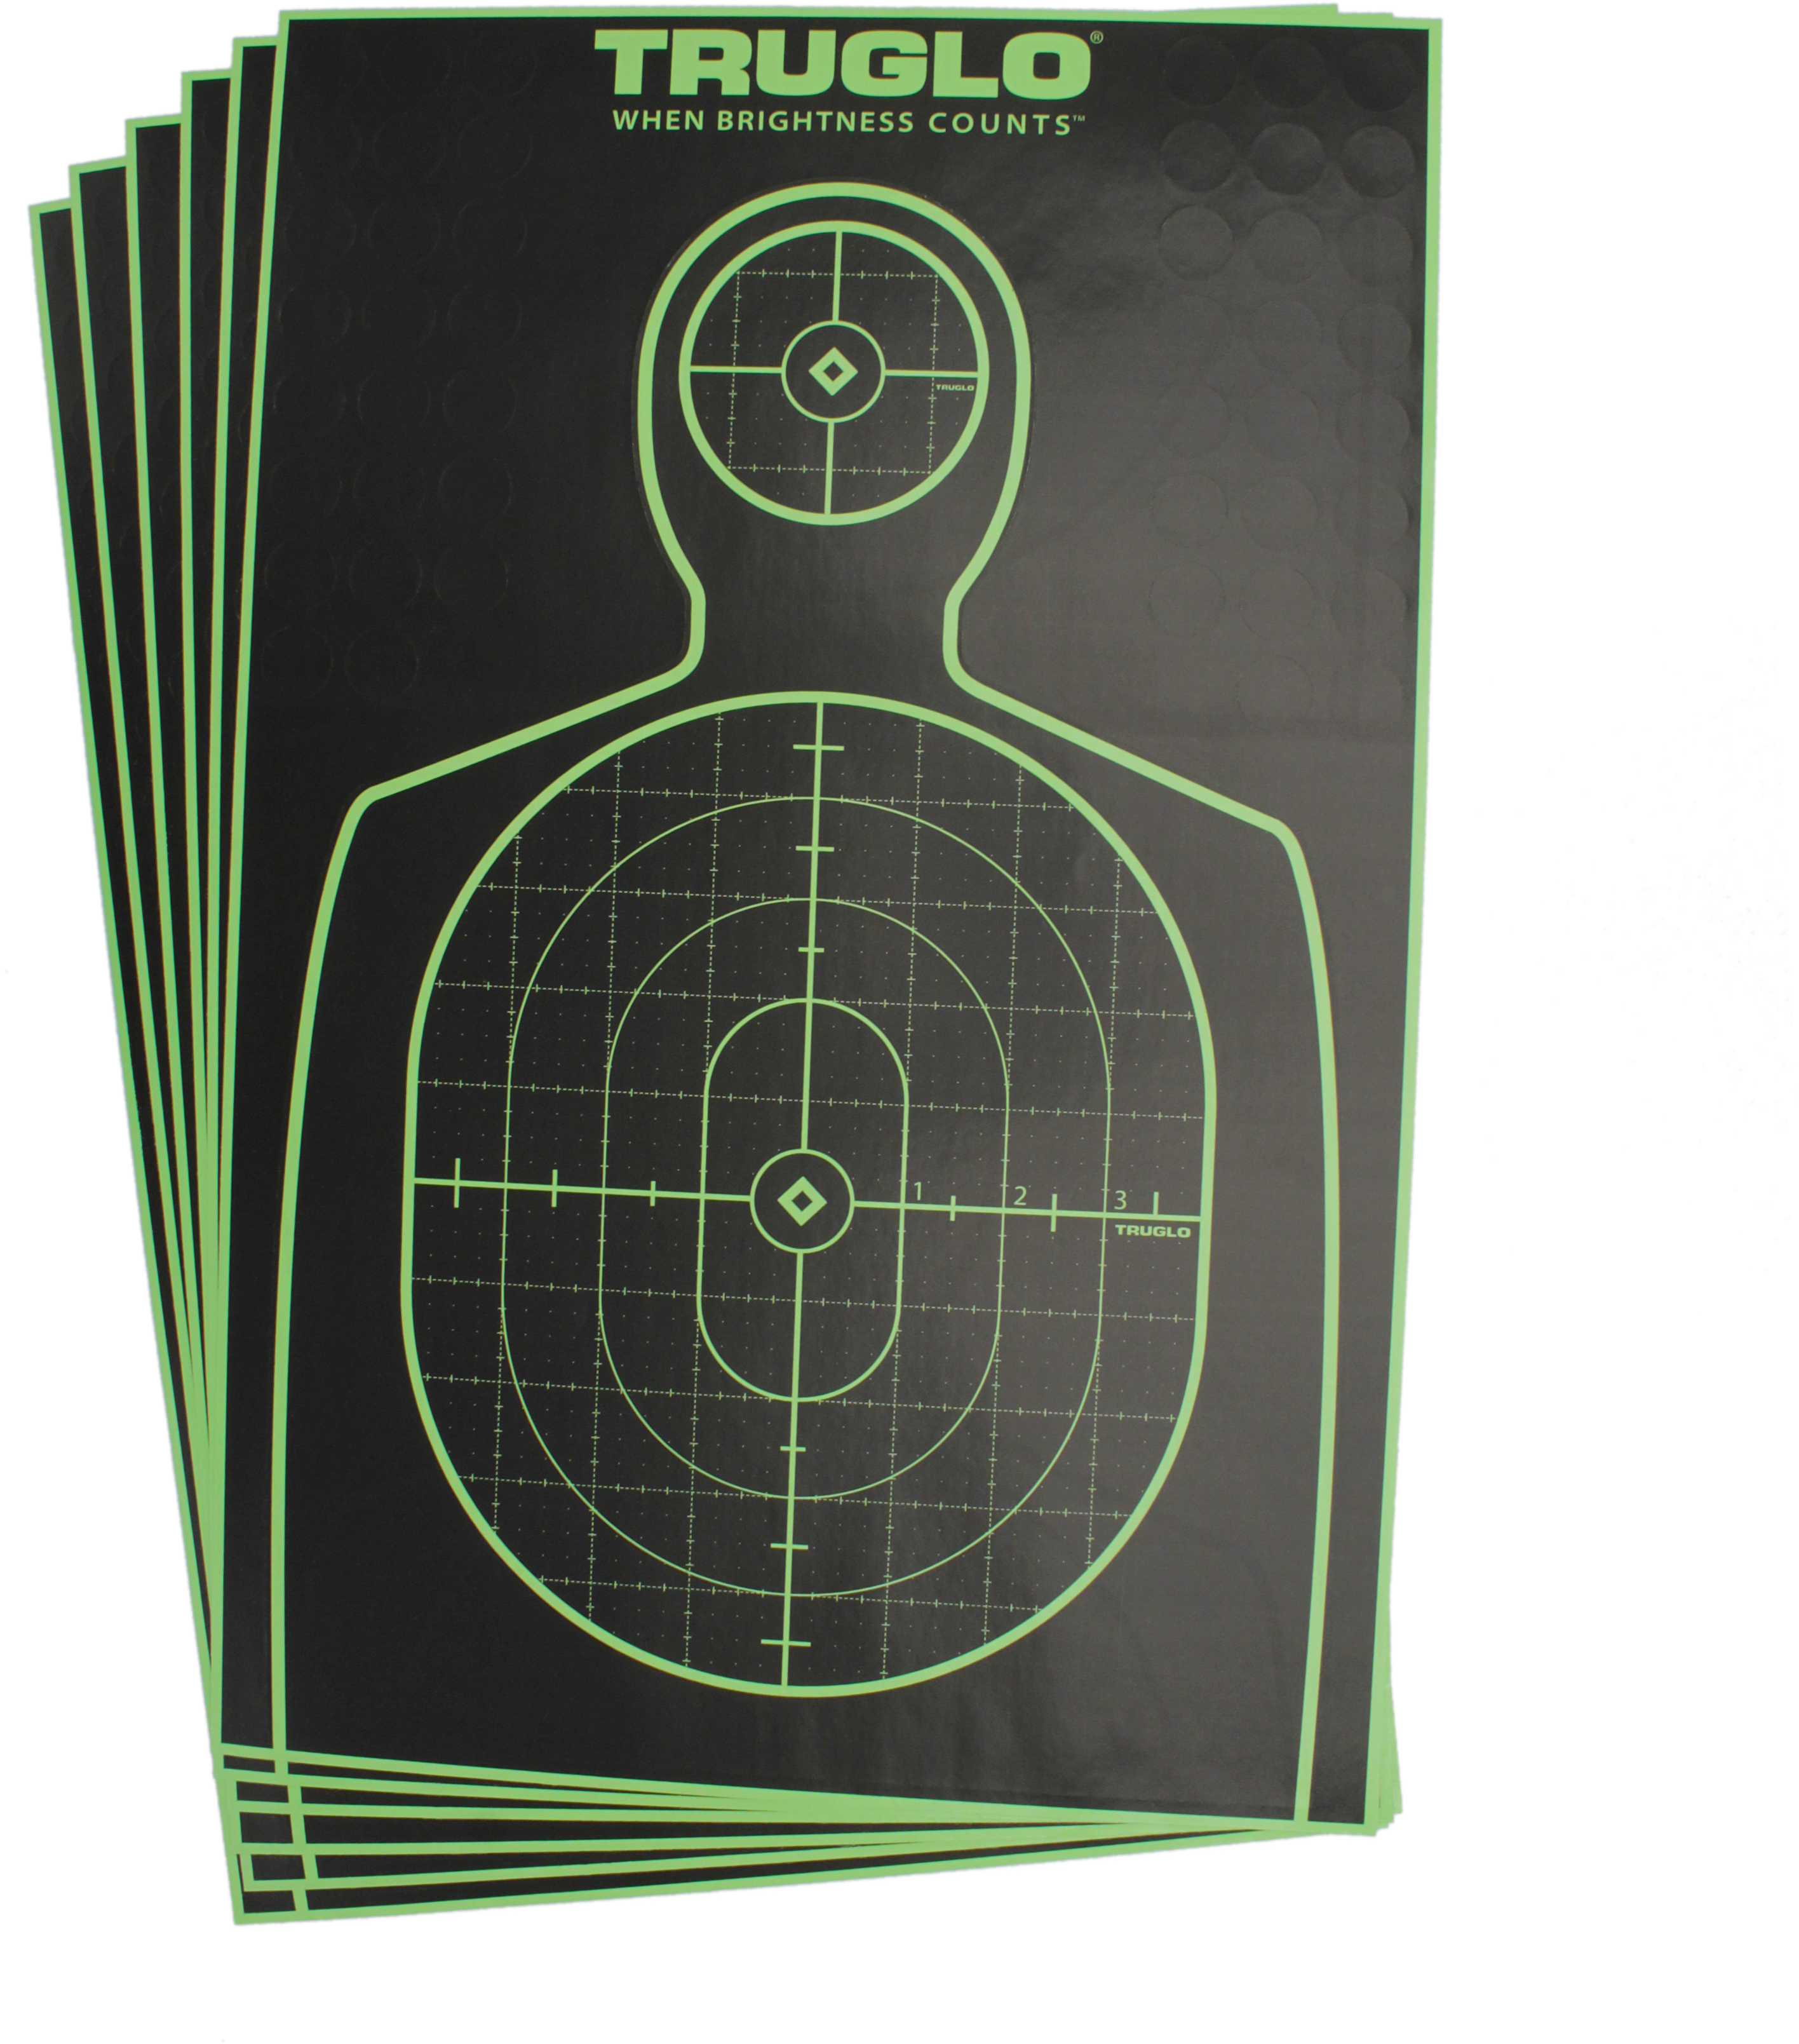 Truglo TRU-See Targets Handgun 12X18" 6Pk